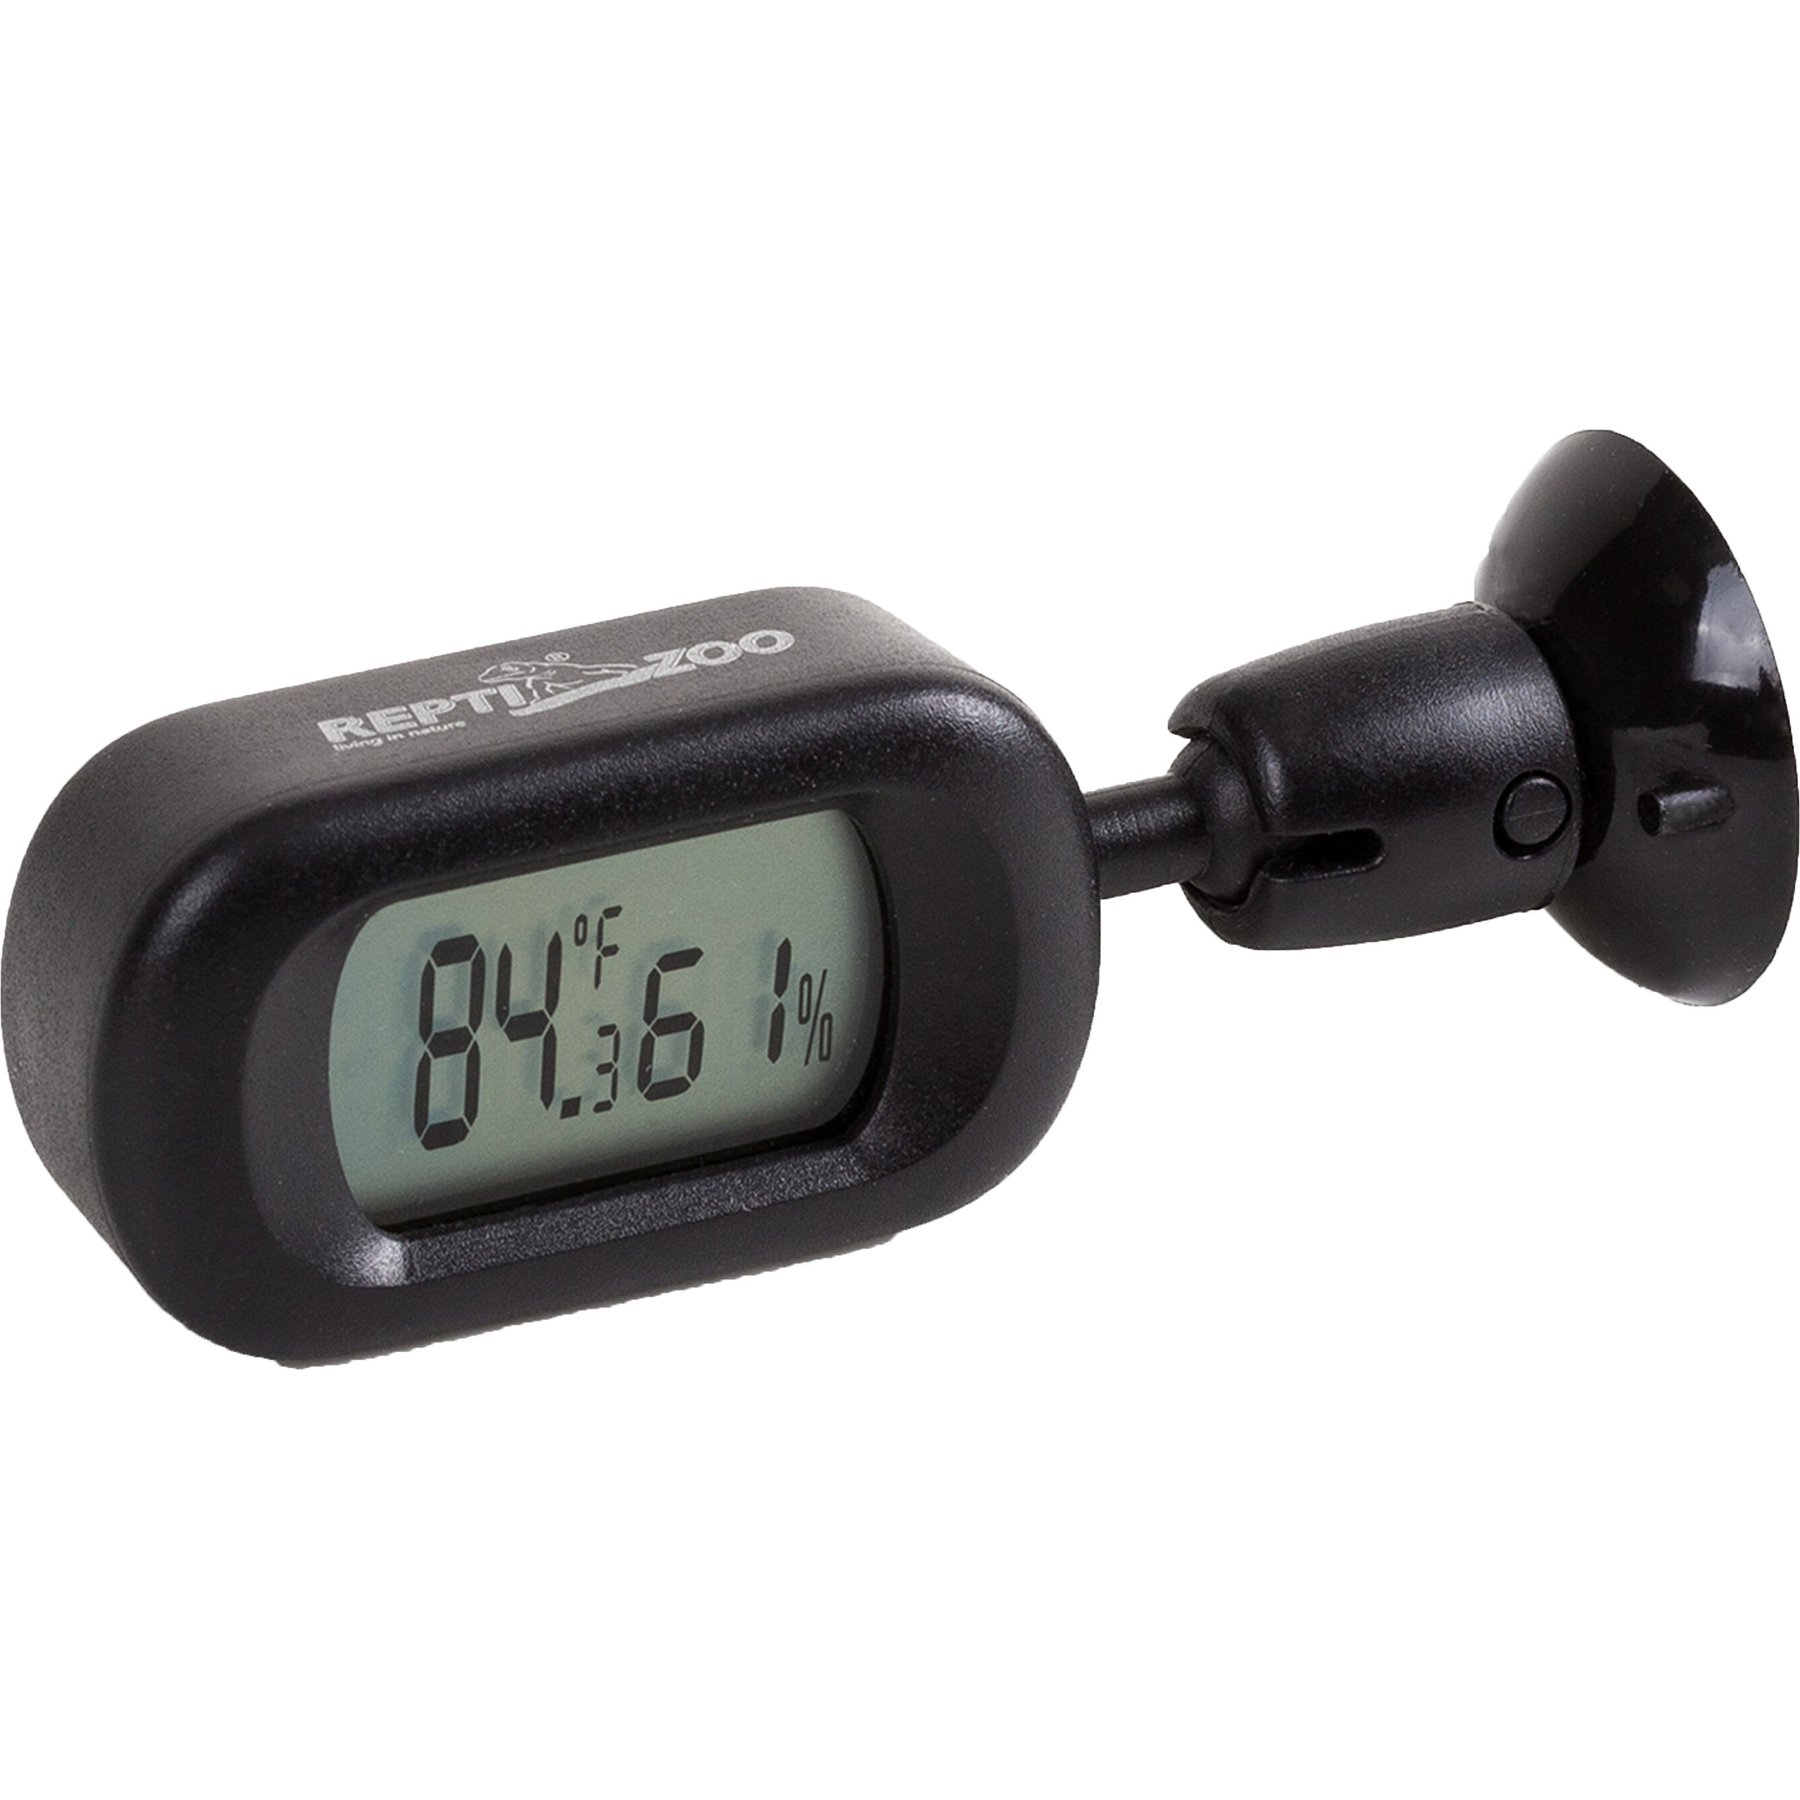 ZILLA Thermometer-Hygrometer for Reptile Terrariums, Digital